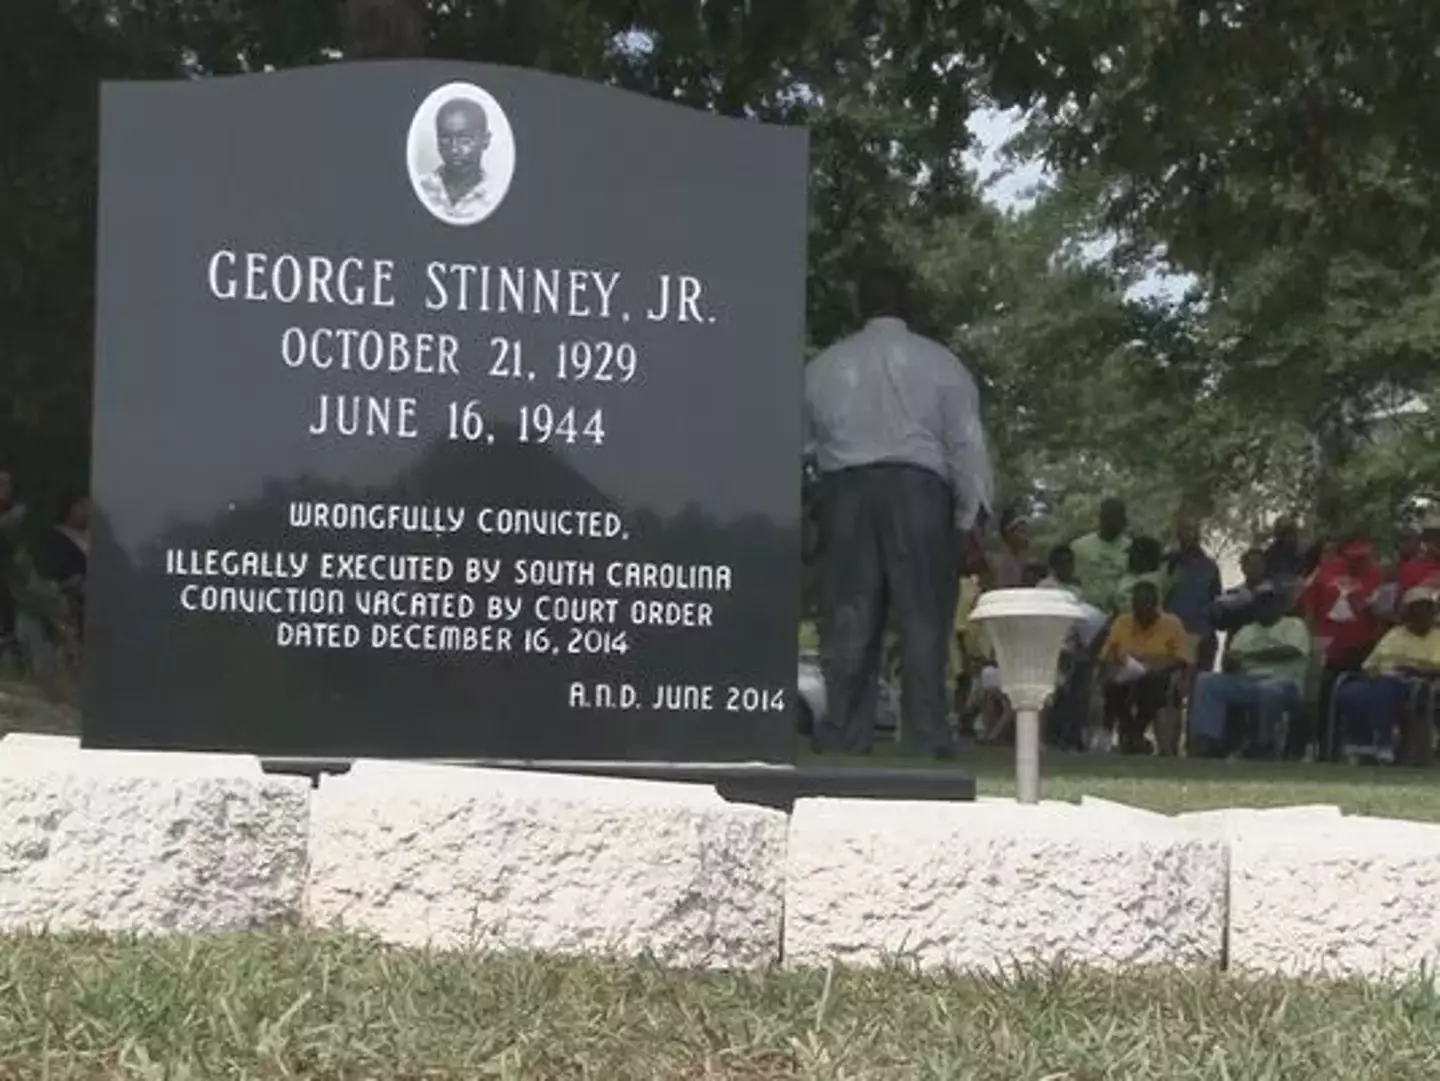 A memorial now commemorates George.